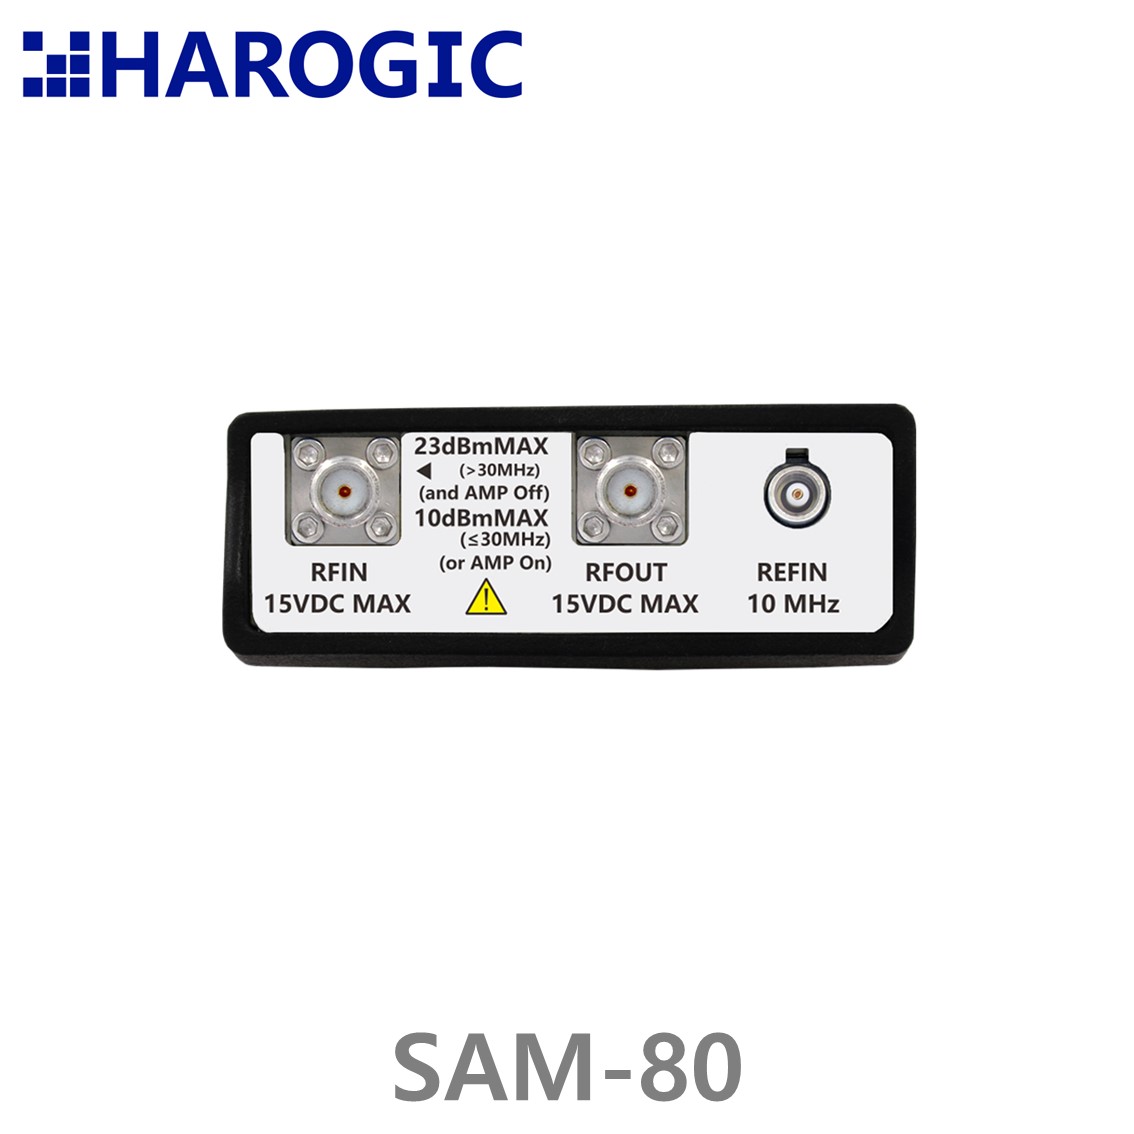 [ HAROGIC ] SAM-80,  USB 초소형 리얼타임 스펙트럼분석기9kHz - 8.5 GHz, 100MHz 대역폭, 300GHz/s sweep speed